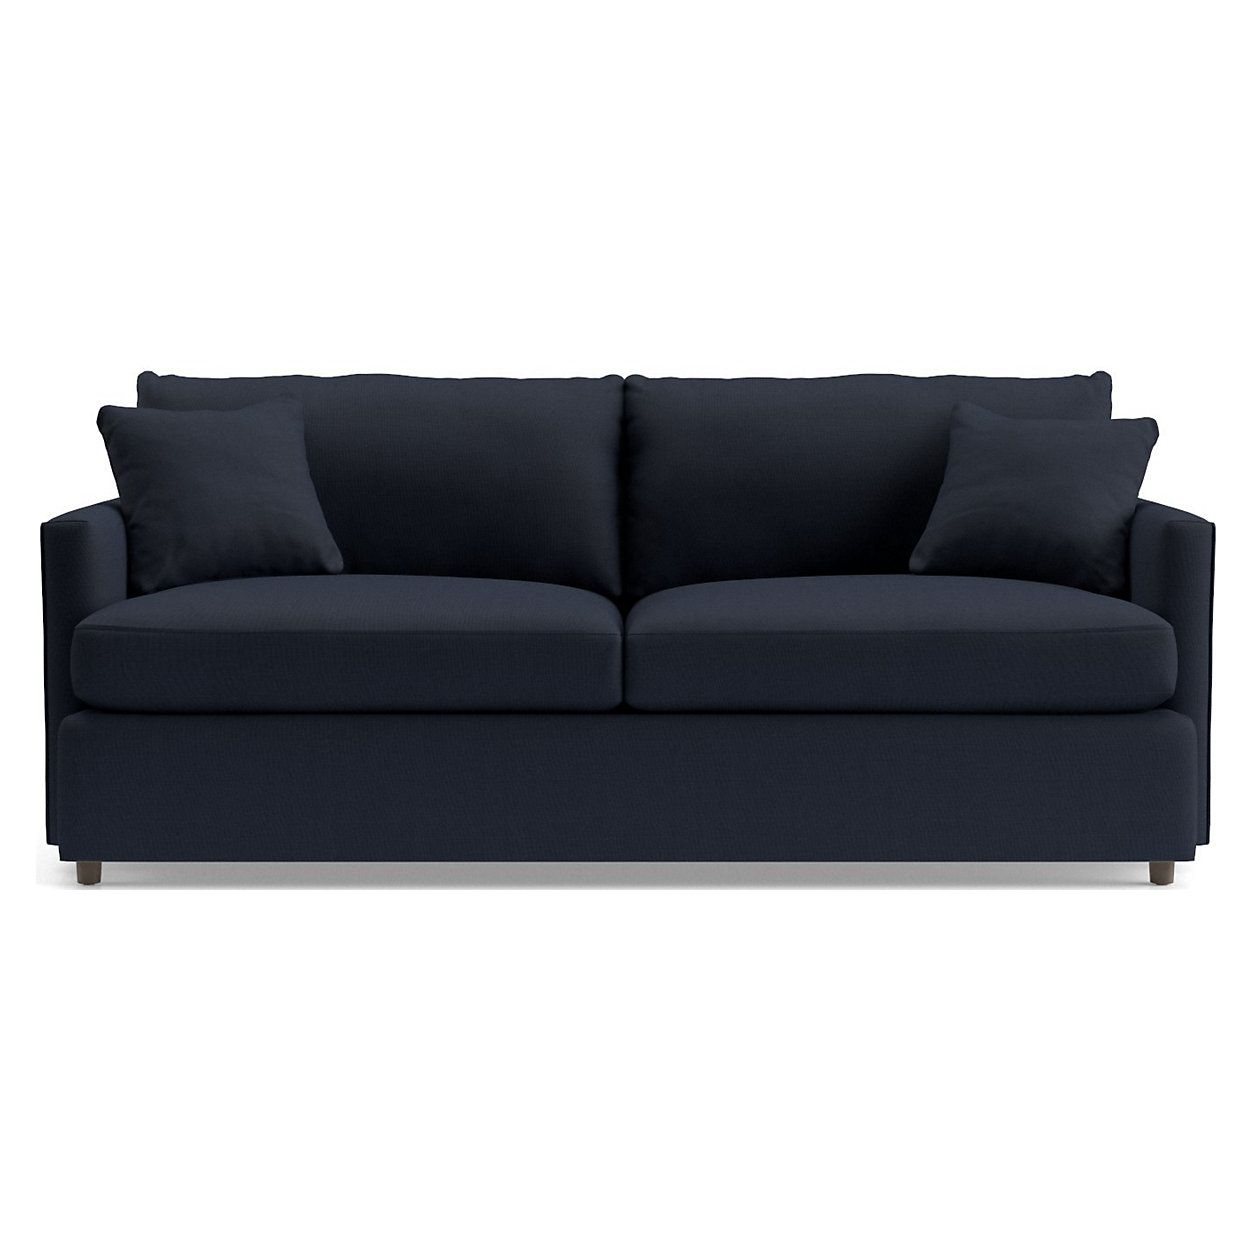 Lounge Comfortable Apartment Sofa + Reviews | Crate and Barrel | Crate & Barrel